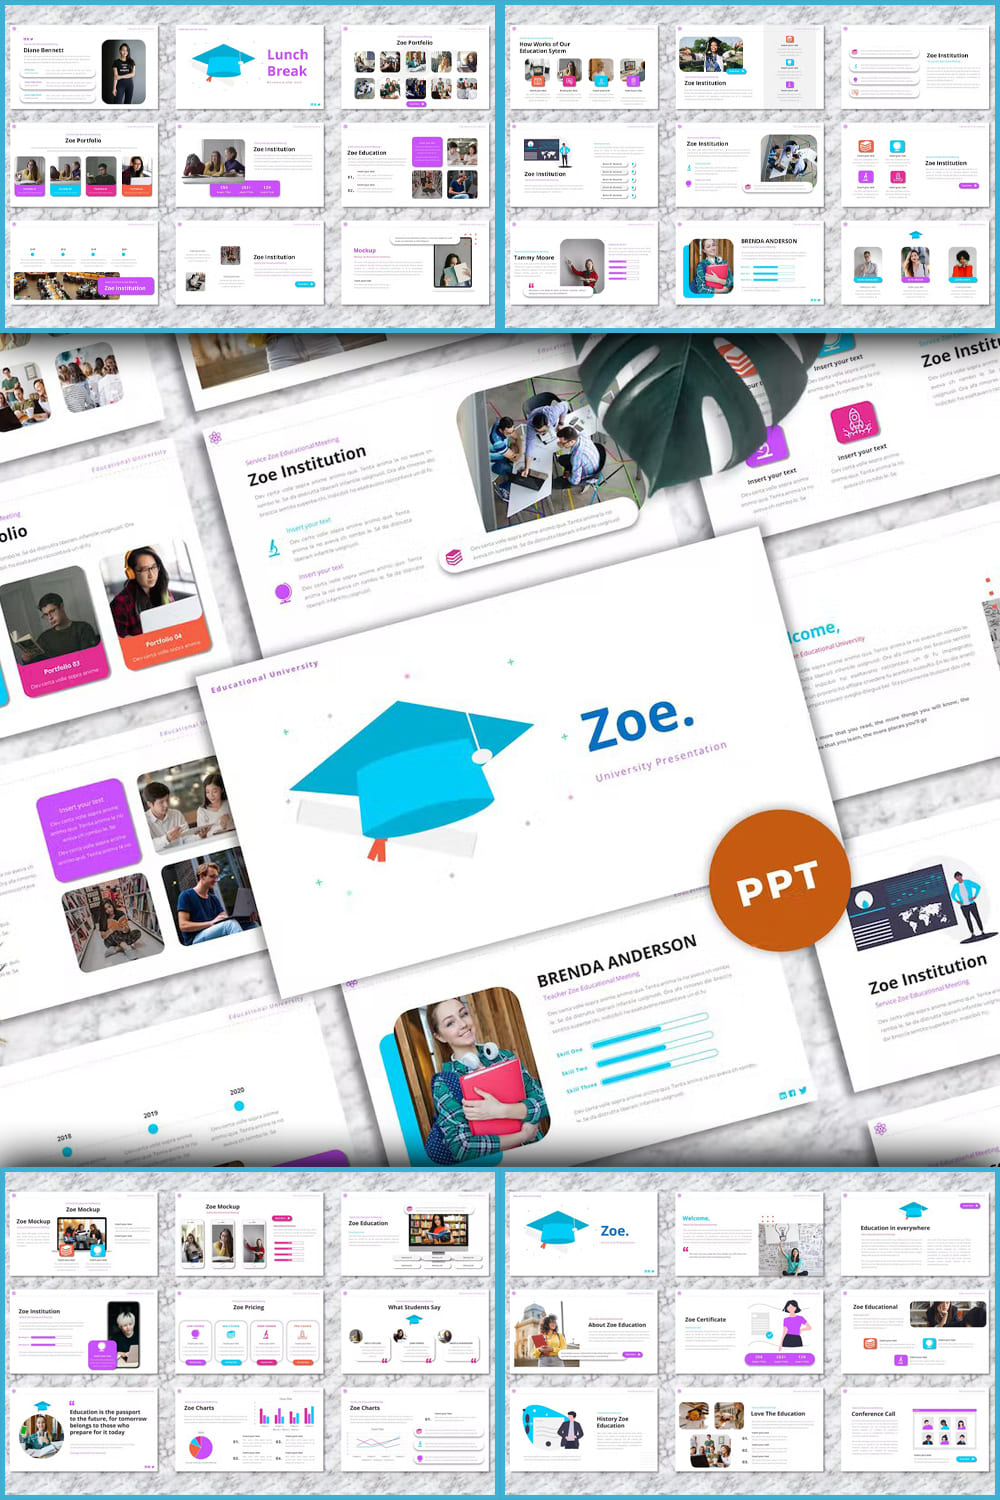 Zoe University Powerpoint Templates - pinterest image preview.